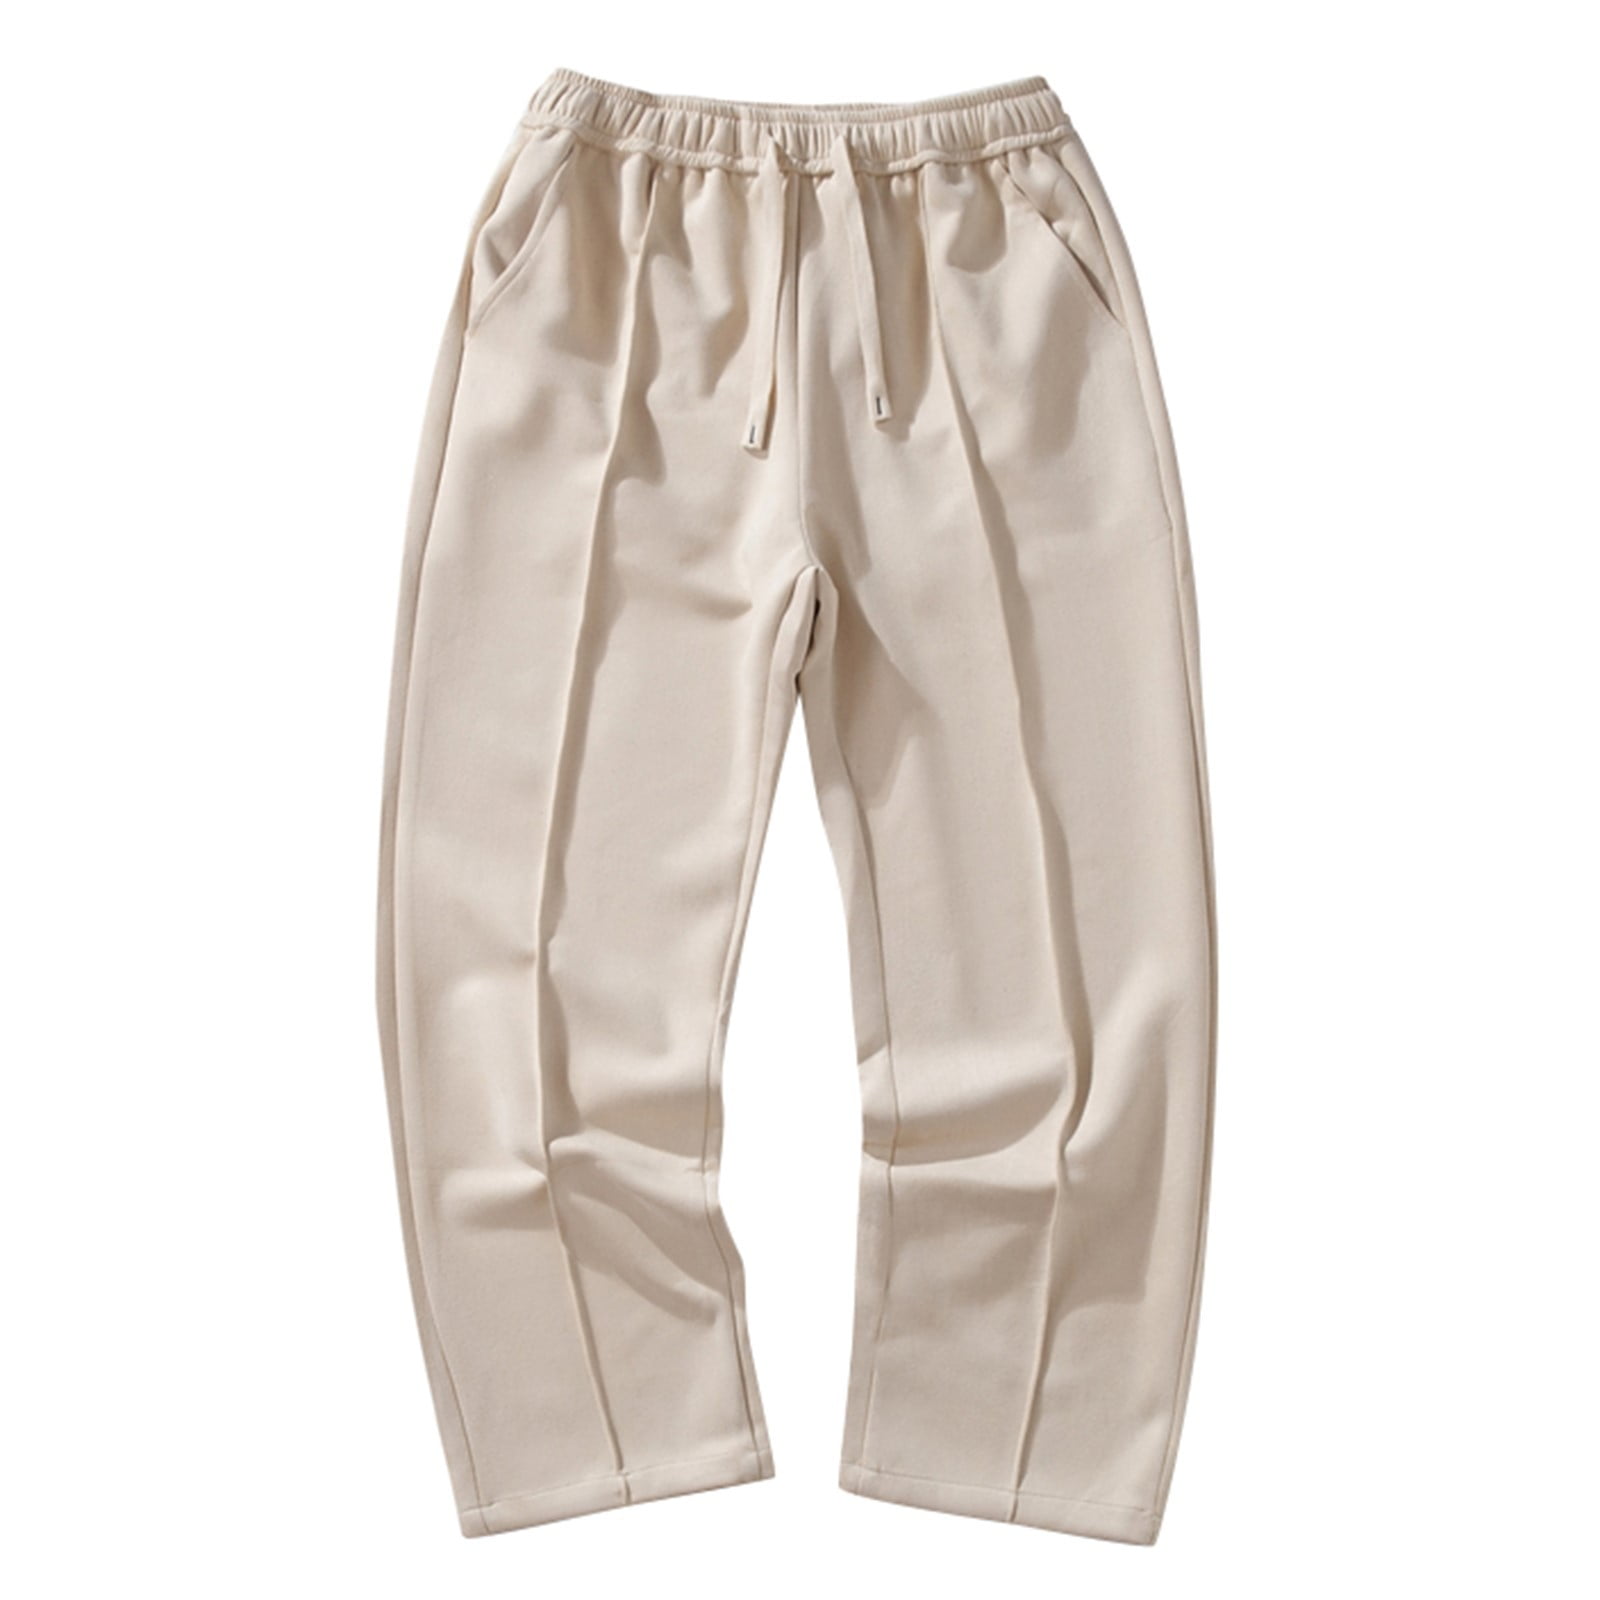 Larisalt Pants For Men Work Casual,Men's Sweatpants Zipper Pockets ...